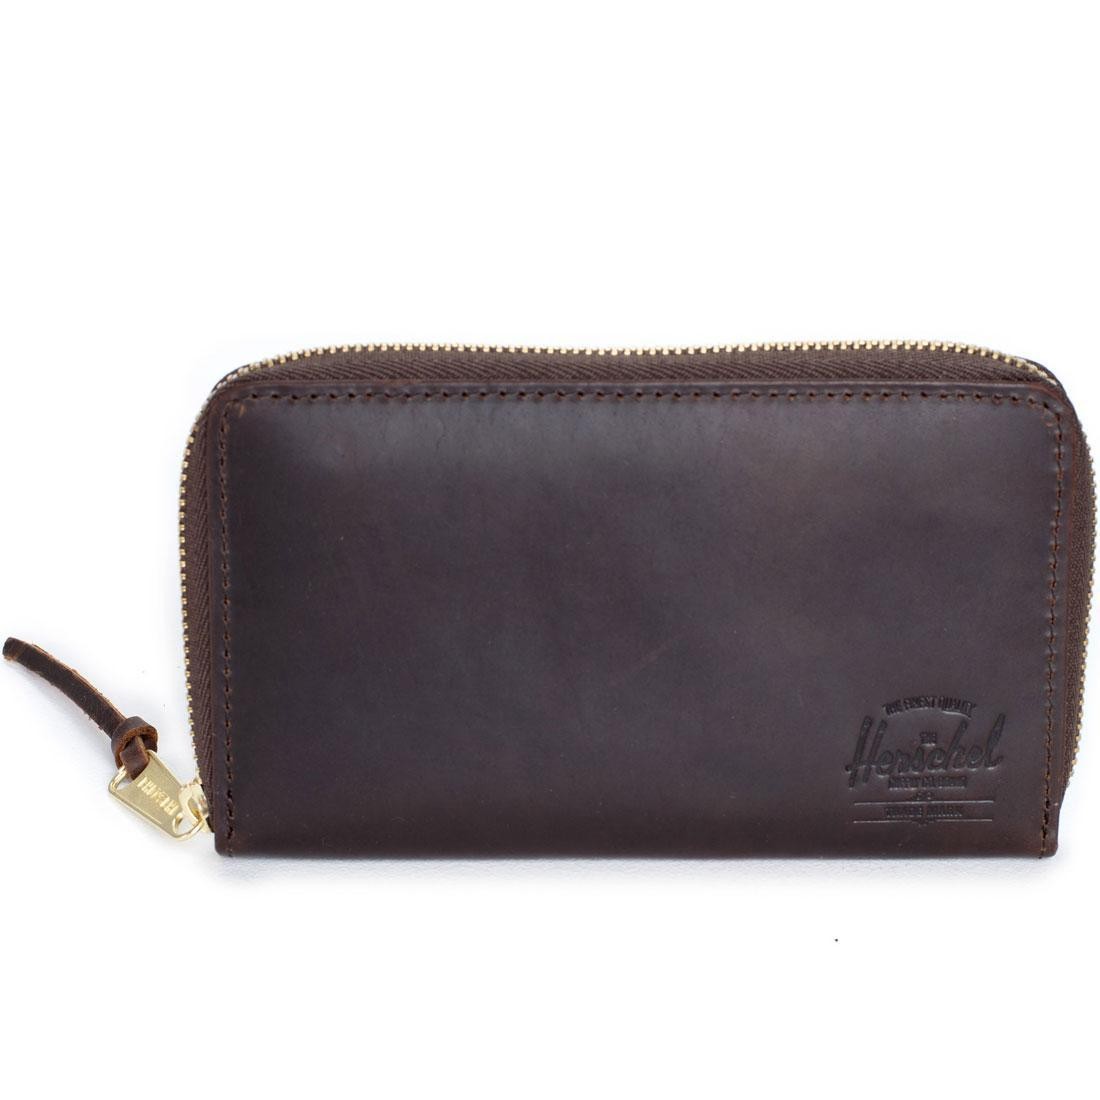 Herschel Supply Co Thomas Leather Wallet (brown / nubuck)